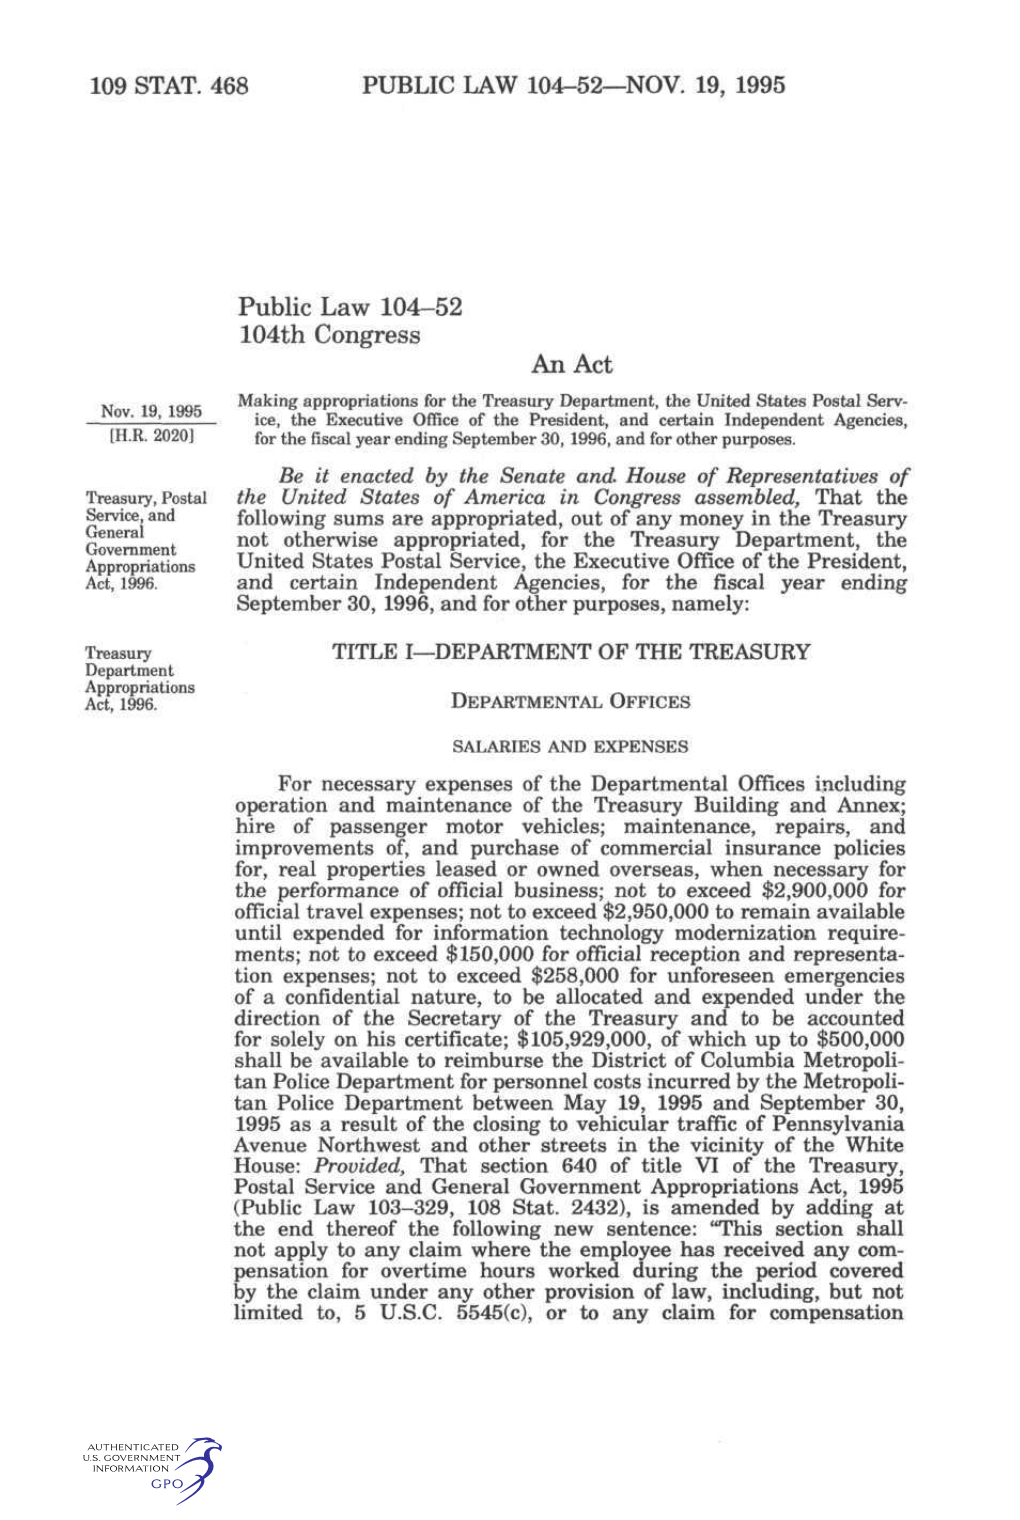 109 Stat. 468 Public Law 104-52—Nov. 19, 1995